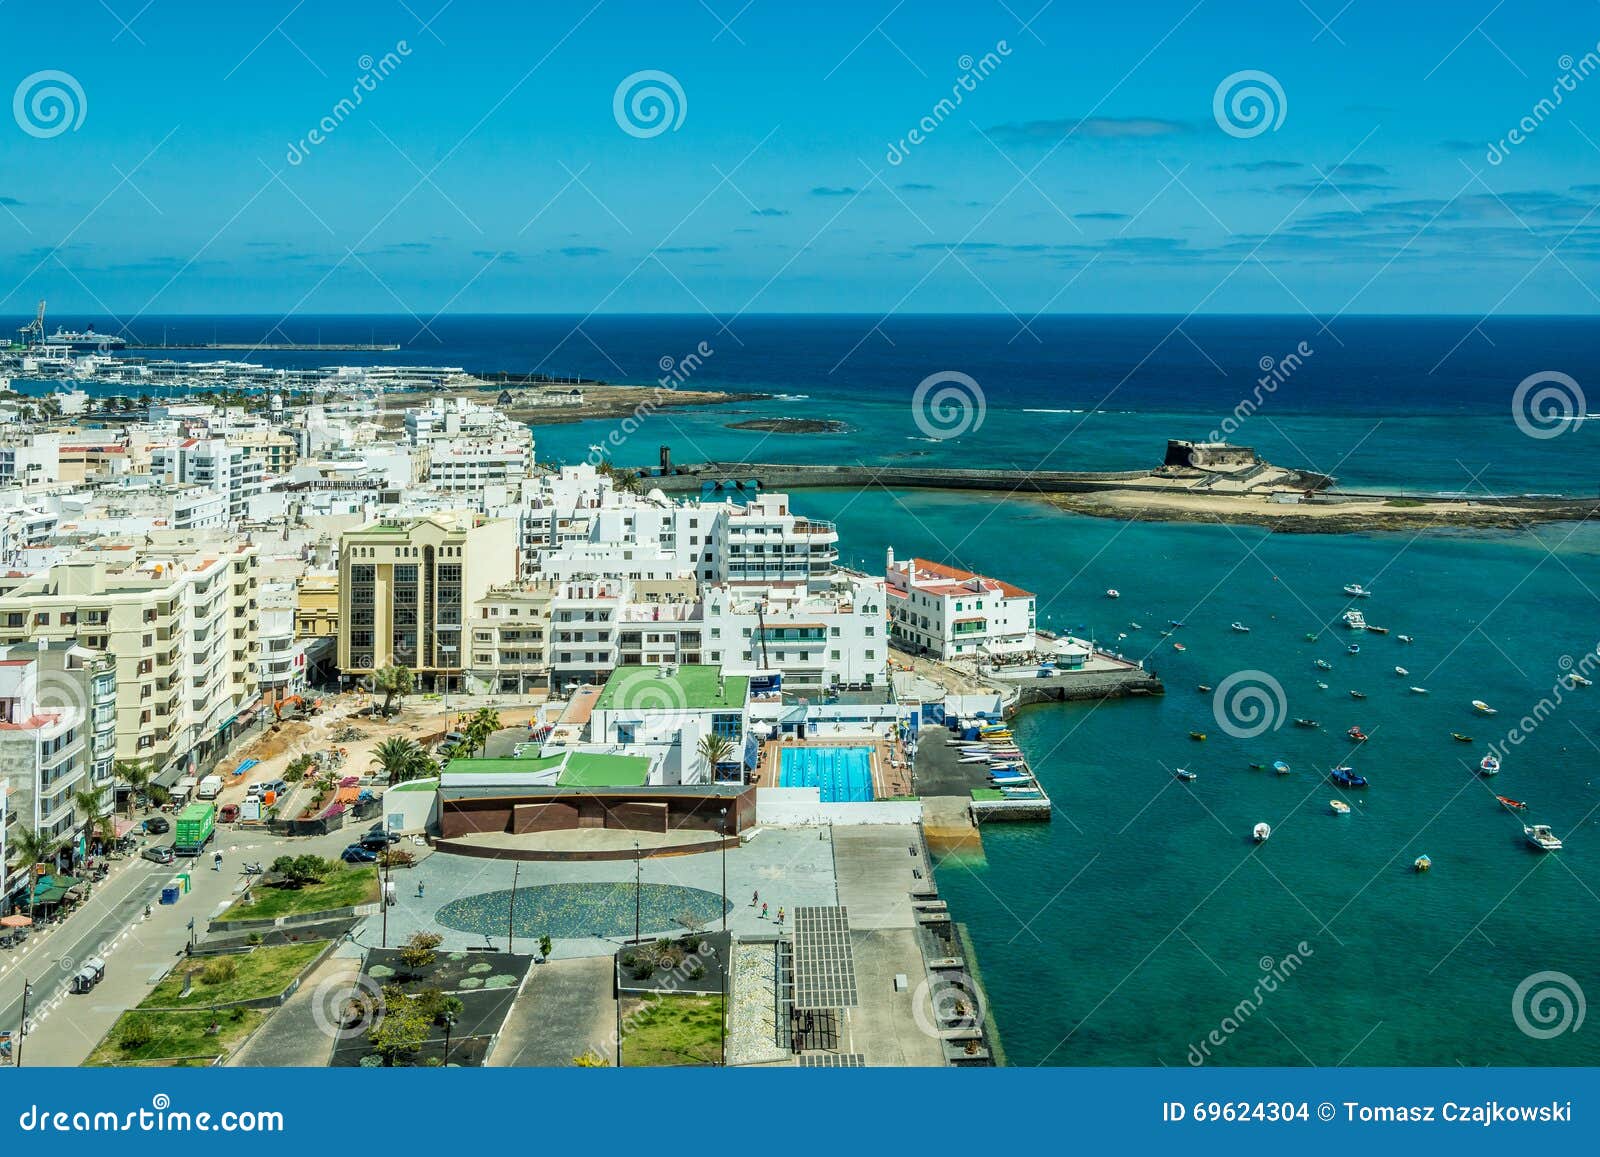 cityscape of arrecife, the capital city of lanzarote island